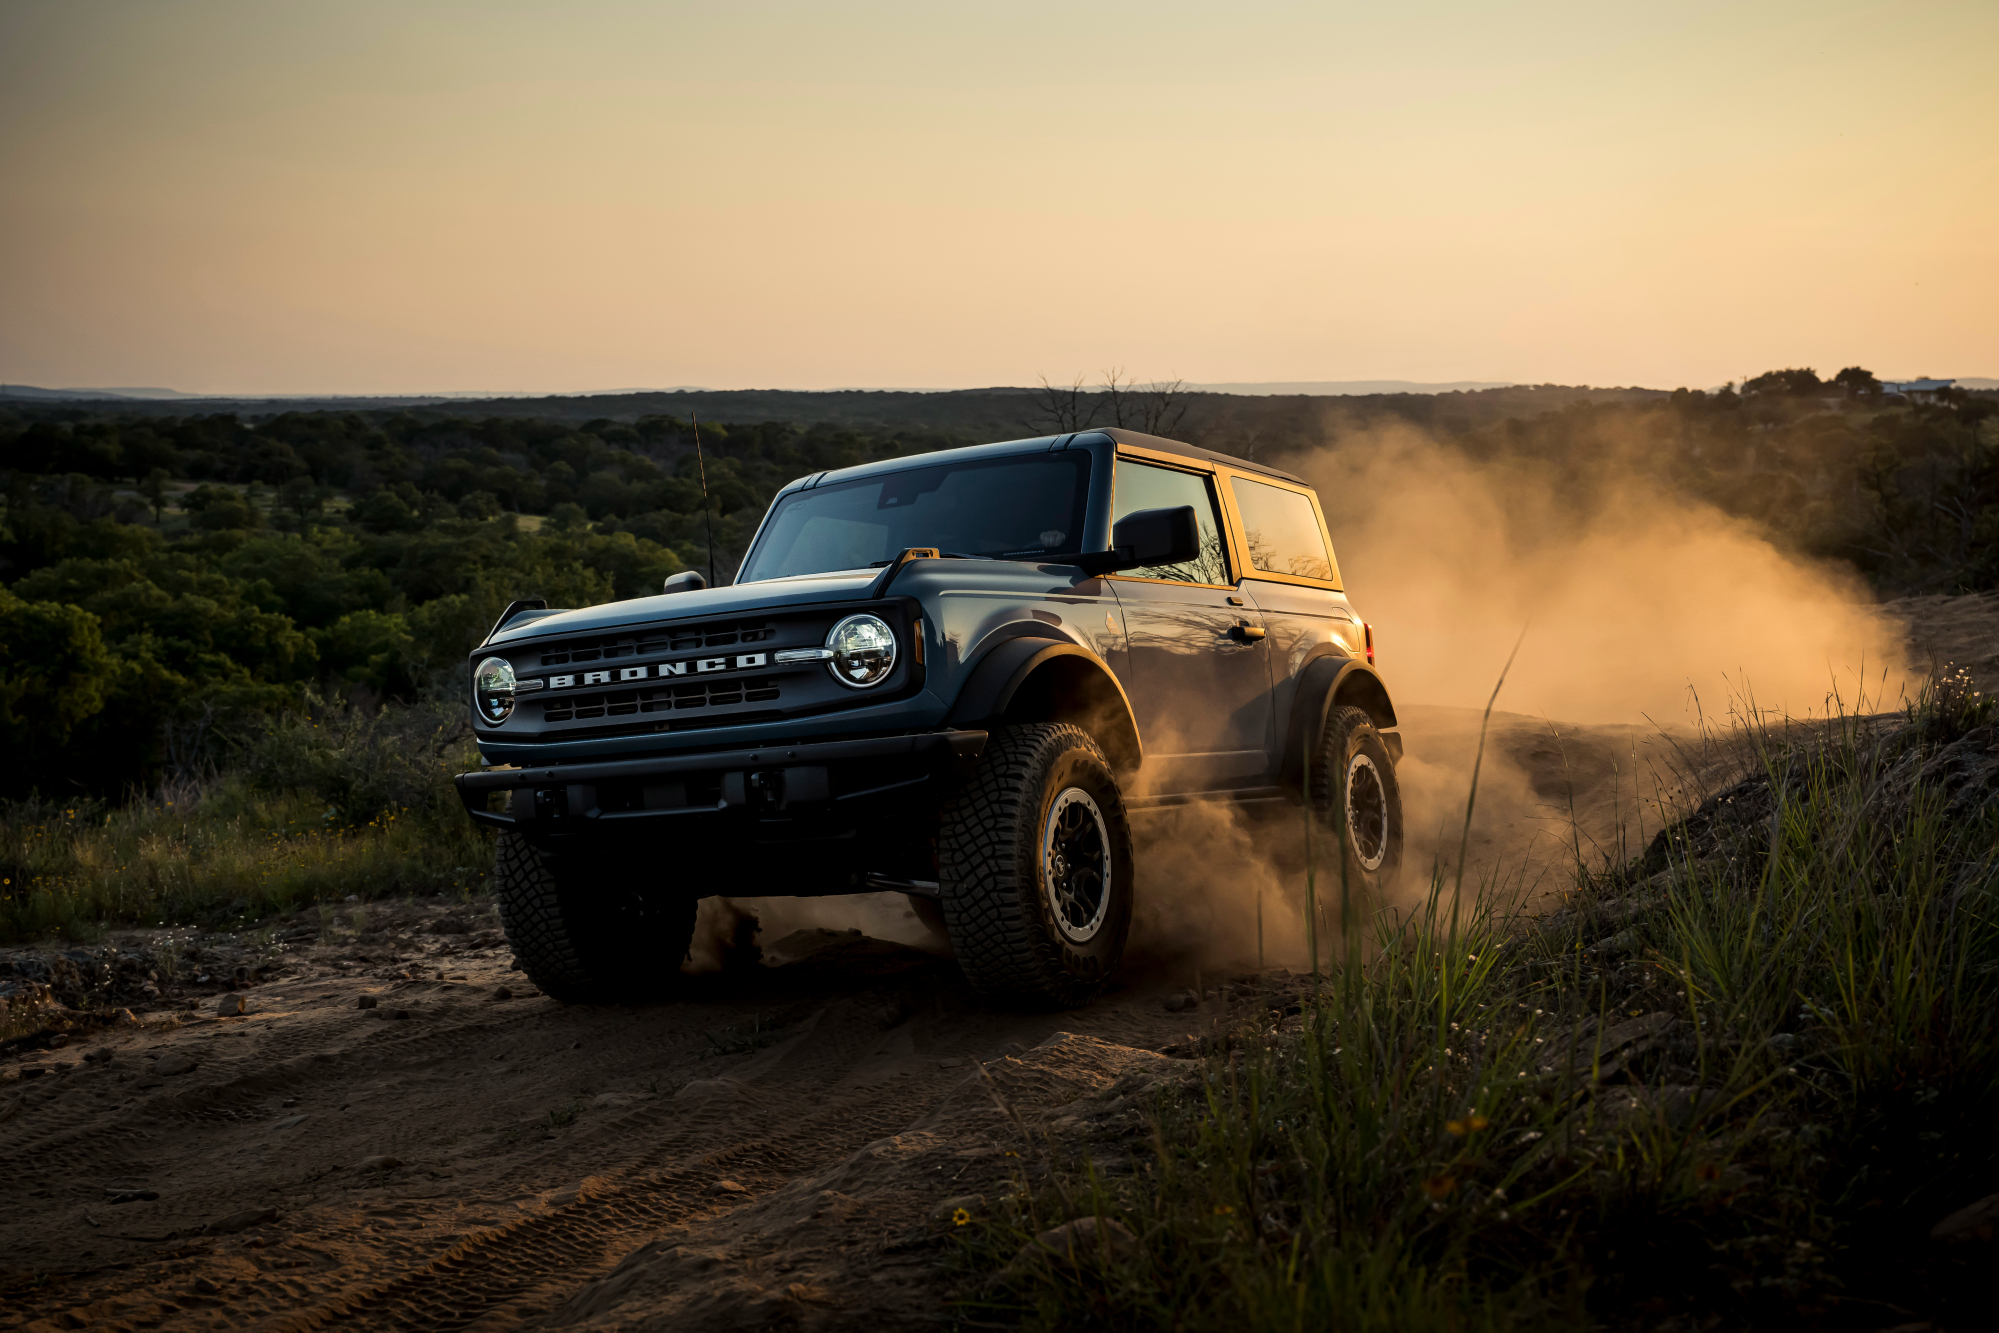 2021 Ford Bronco 2-door speeding on a dirt road in the desert.